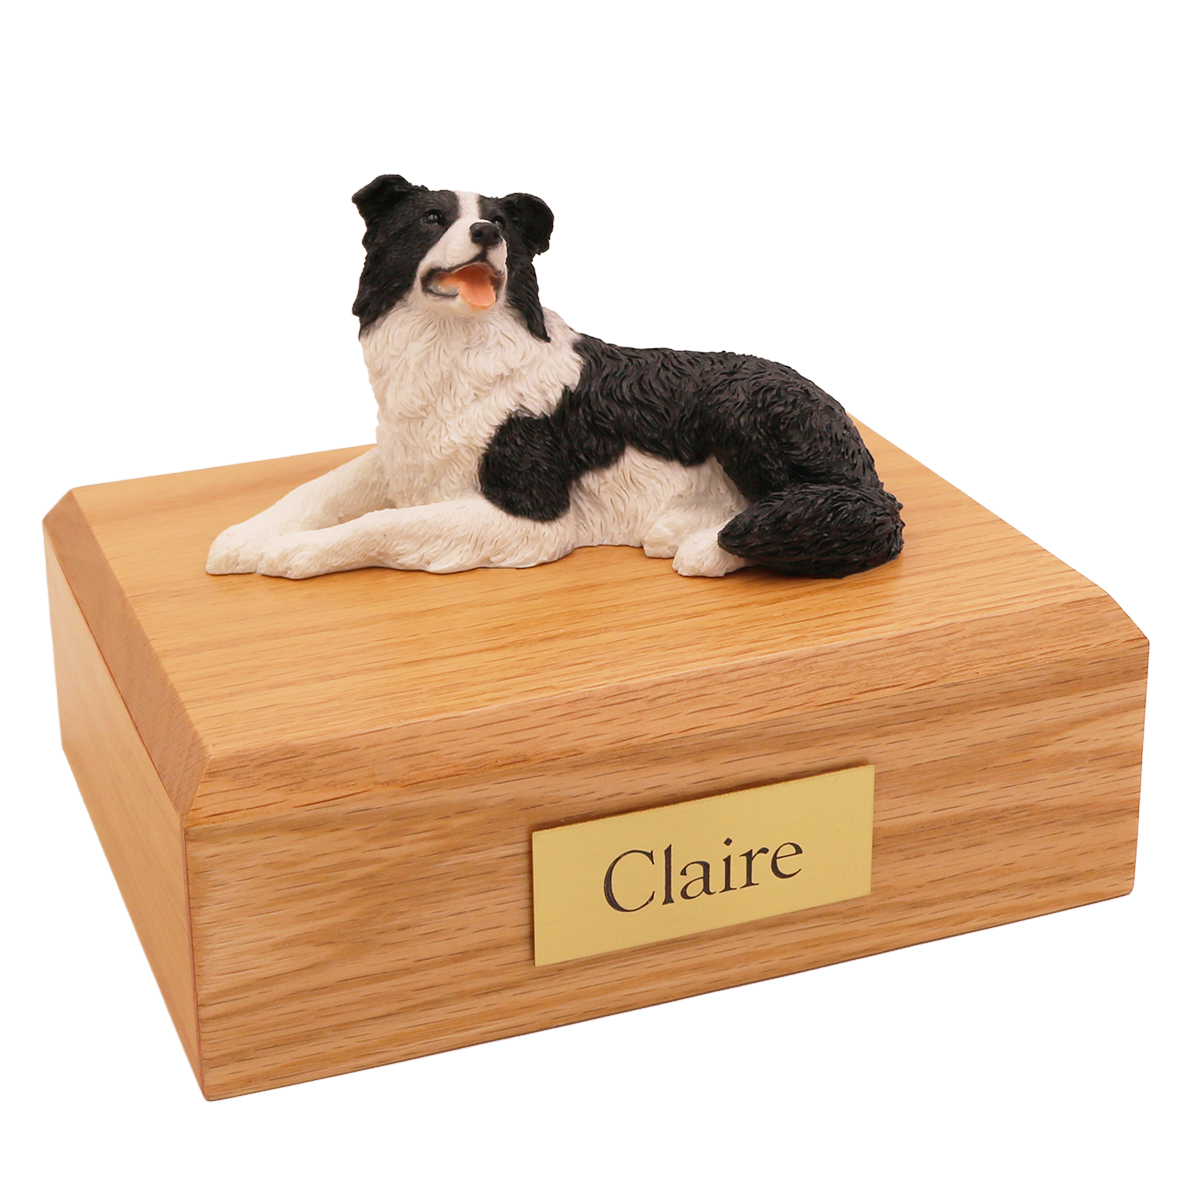 Dog, Border Collie, Lying - Figurine Urn